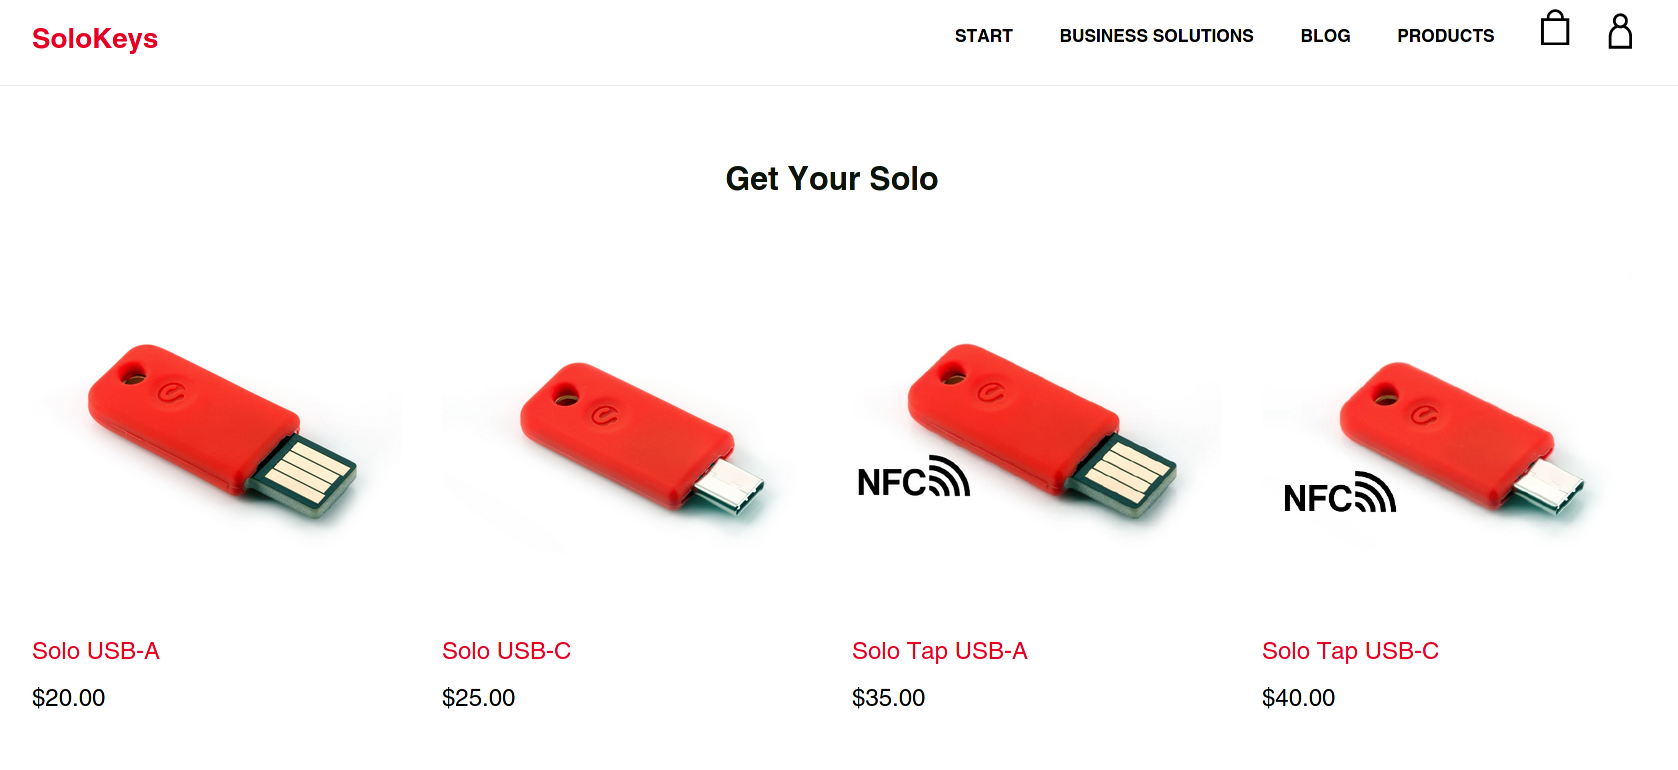 Hardware keys from solokeys - product view - screenshot